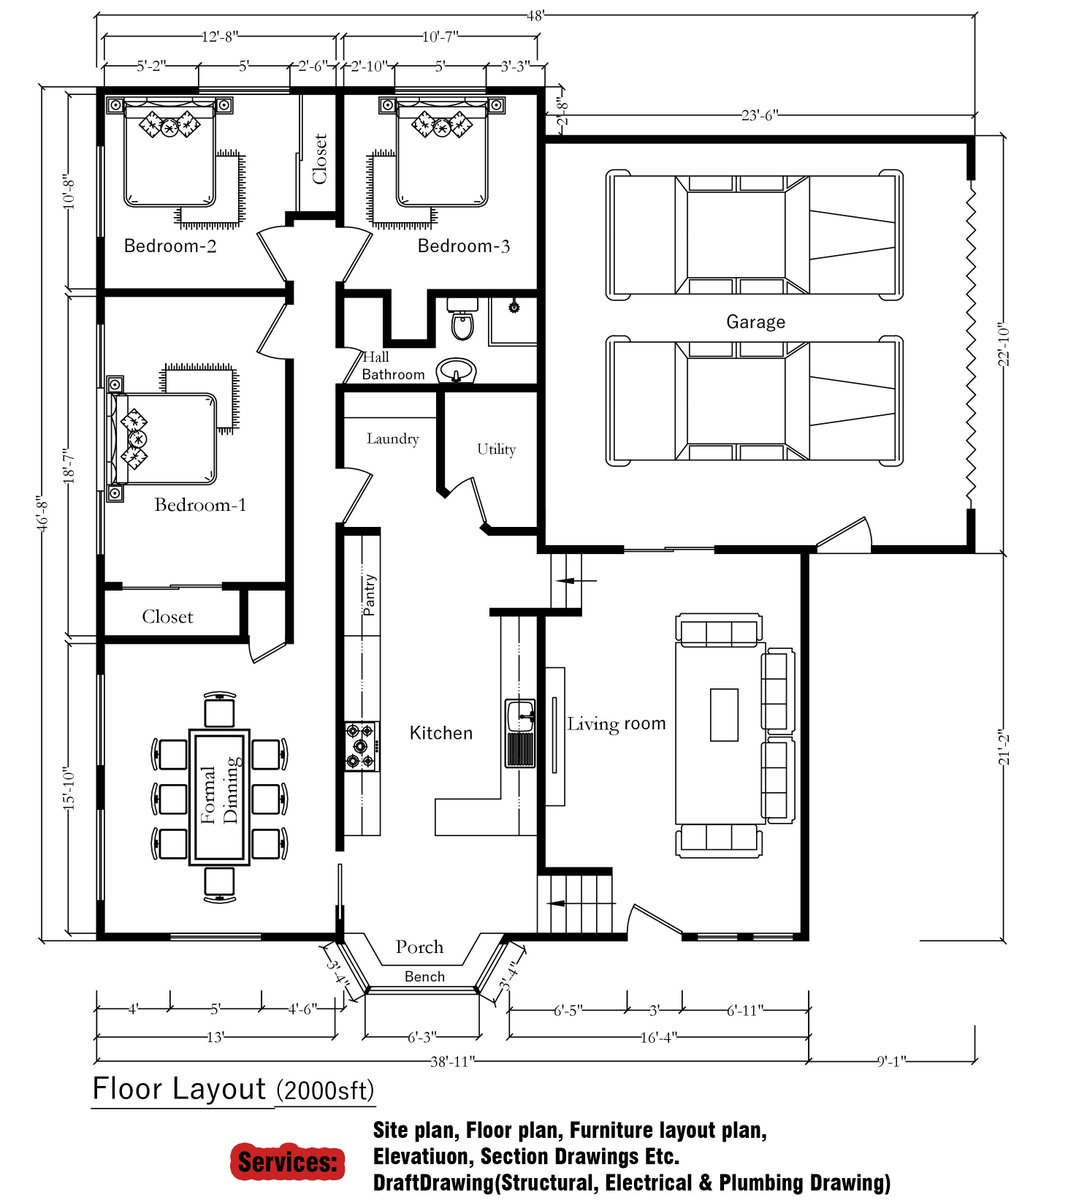 House floorplan
Done for my NZ client. 
Contact for your design fiverr.com/share/meXxQP

#floorplan #floorlayout #arch #architecturelovers #plan #houseplan #housemaker #housefloorplan #2dplan #2ddesign #furniture #detaildrawing #floormap